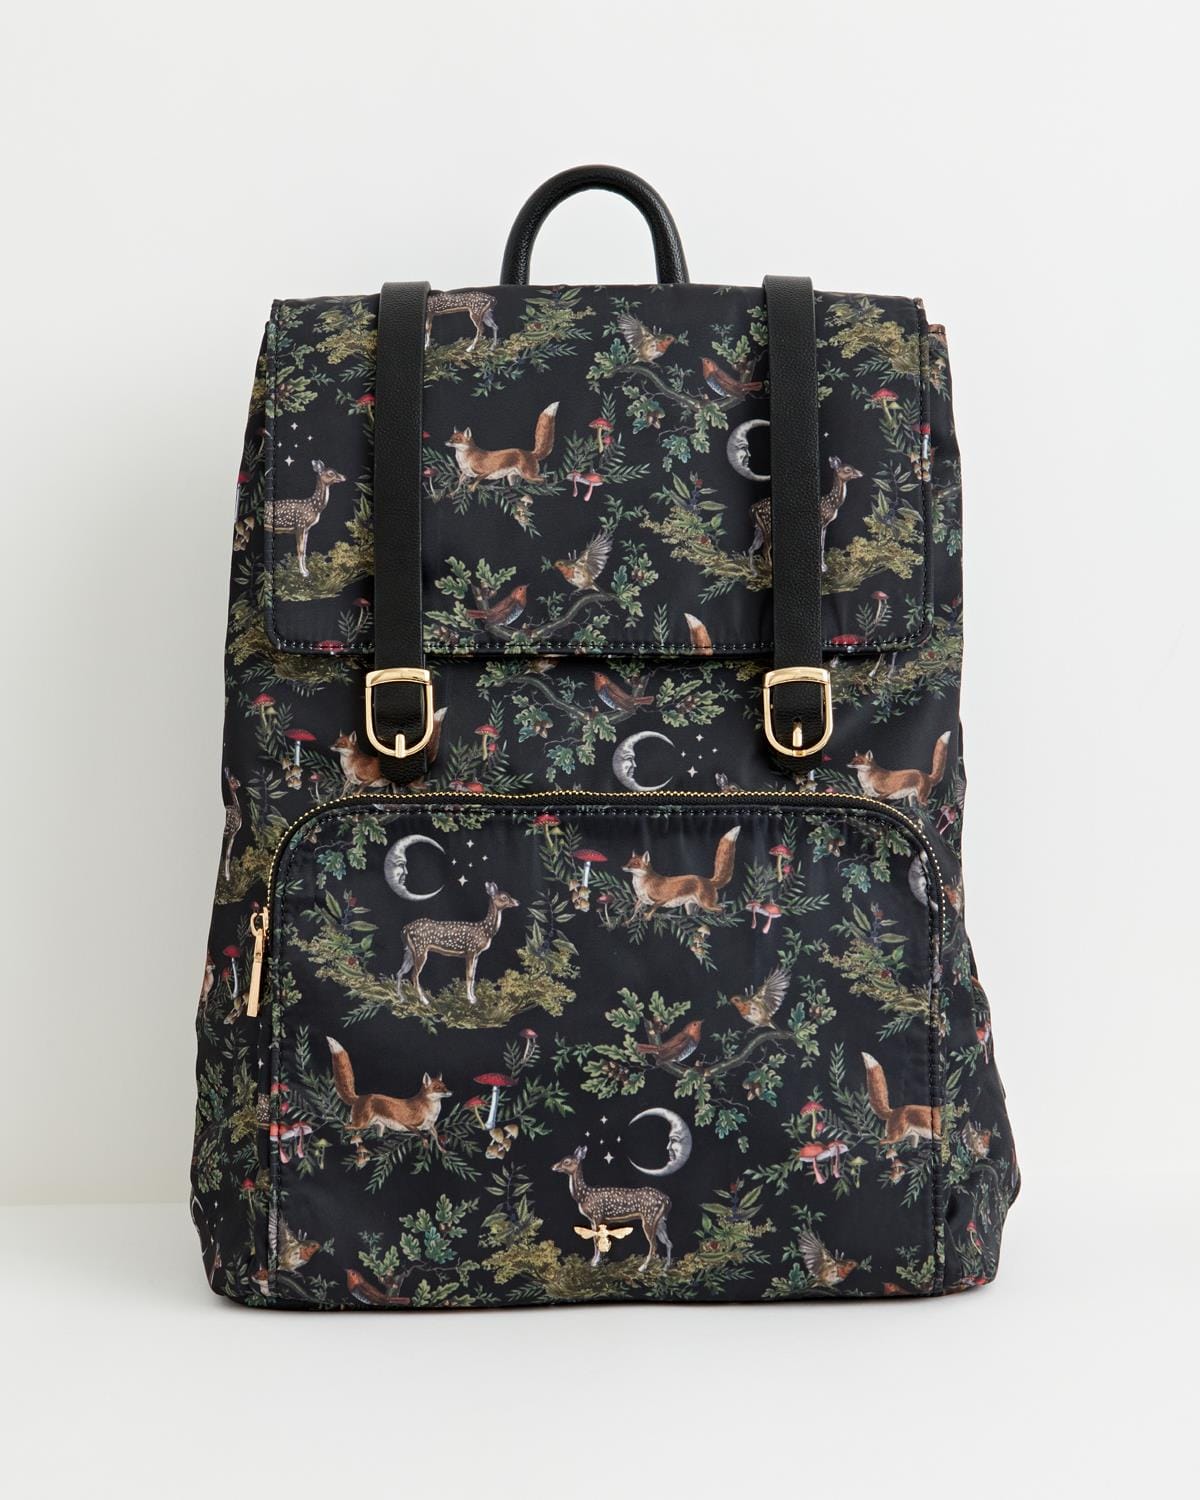 Wild fable backpack - Gem